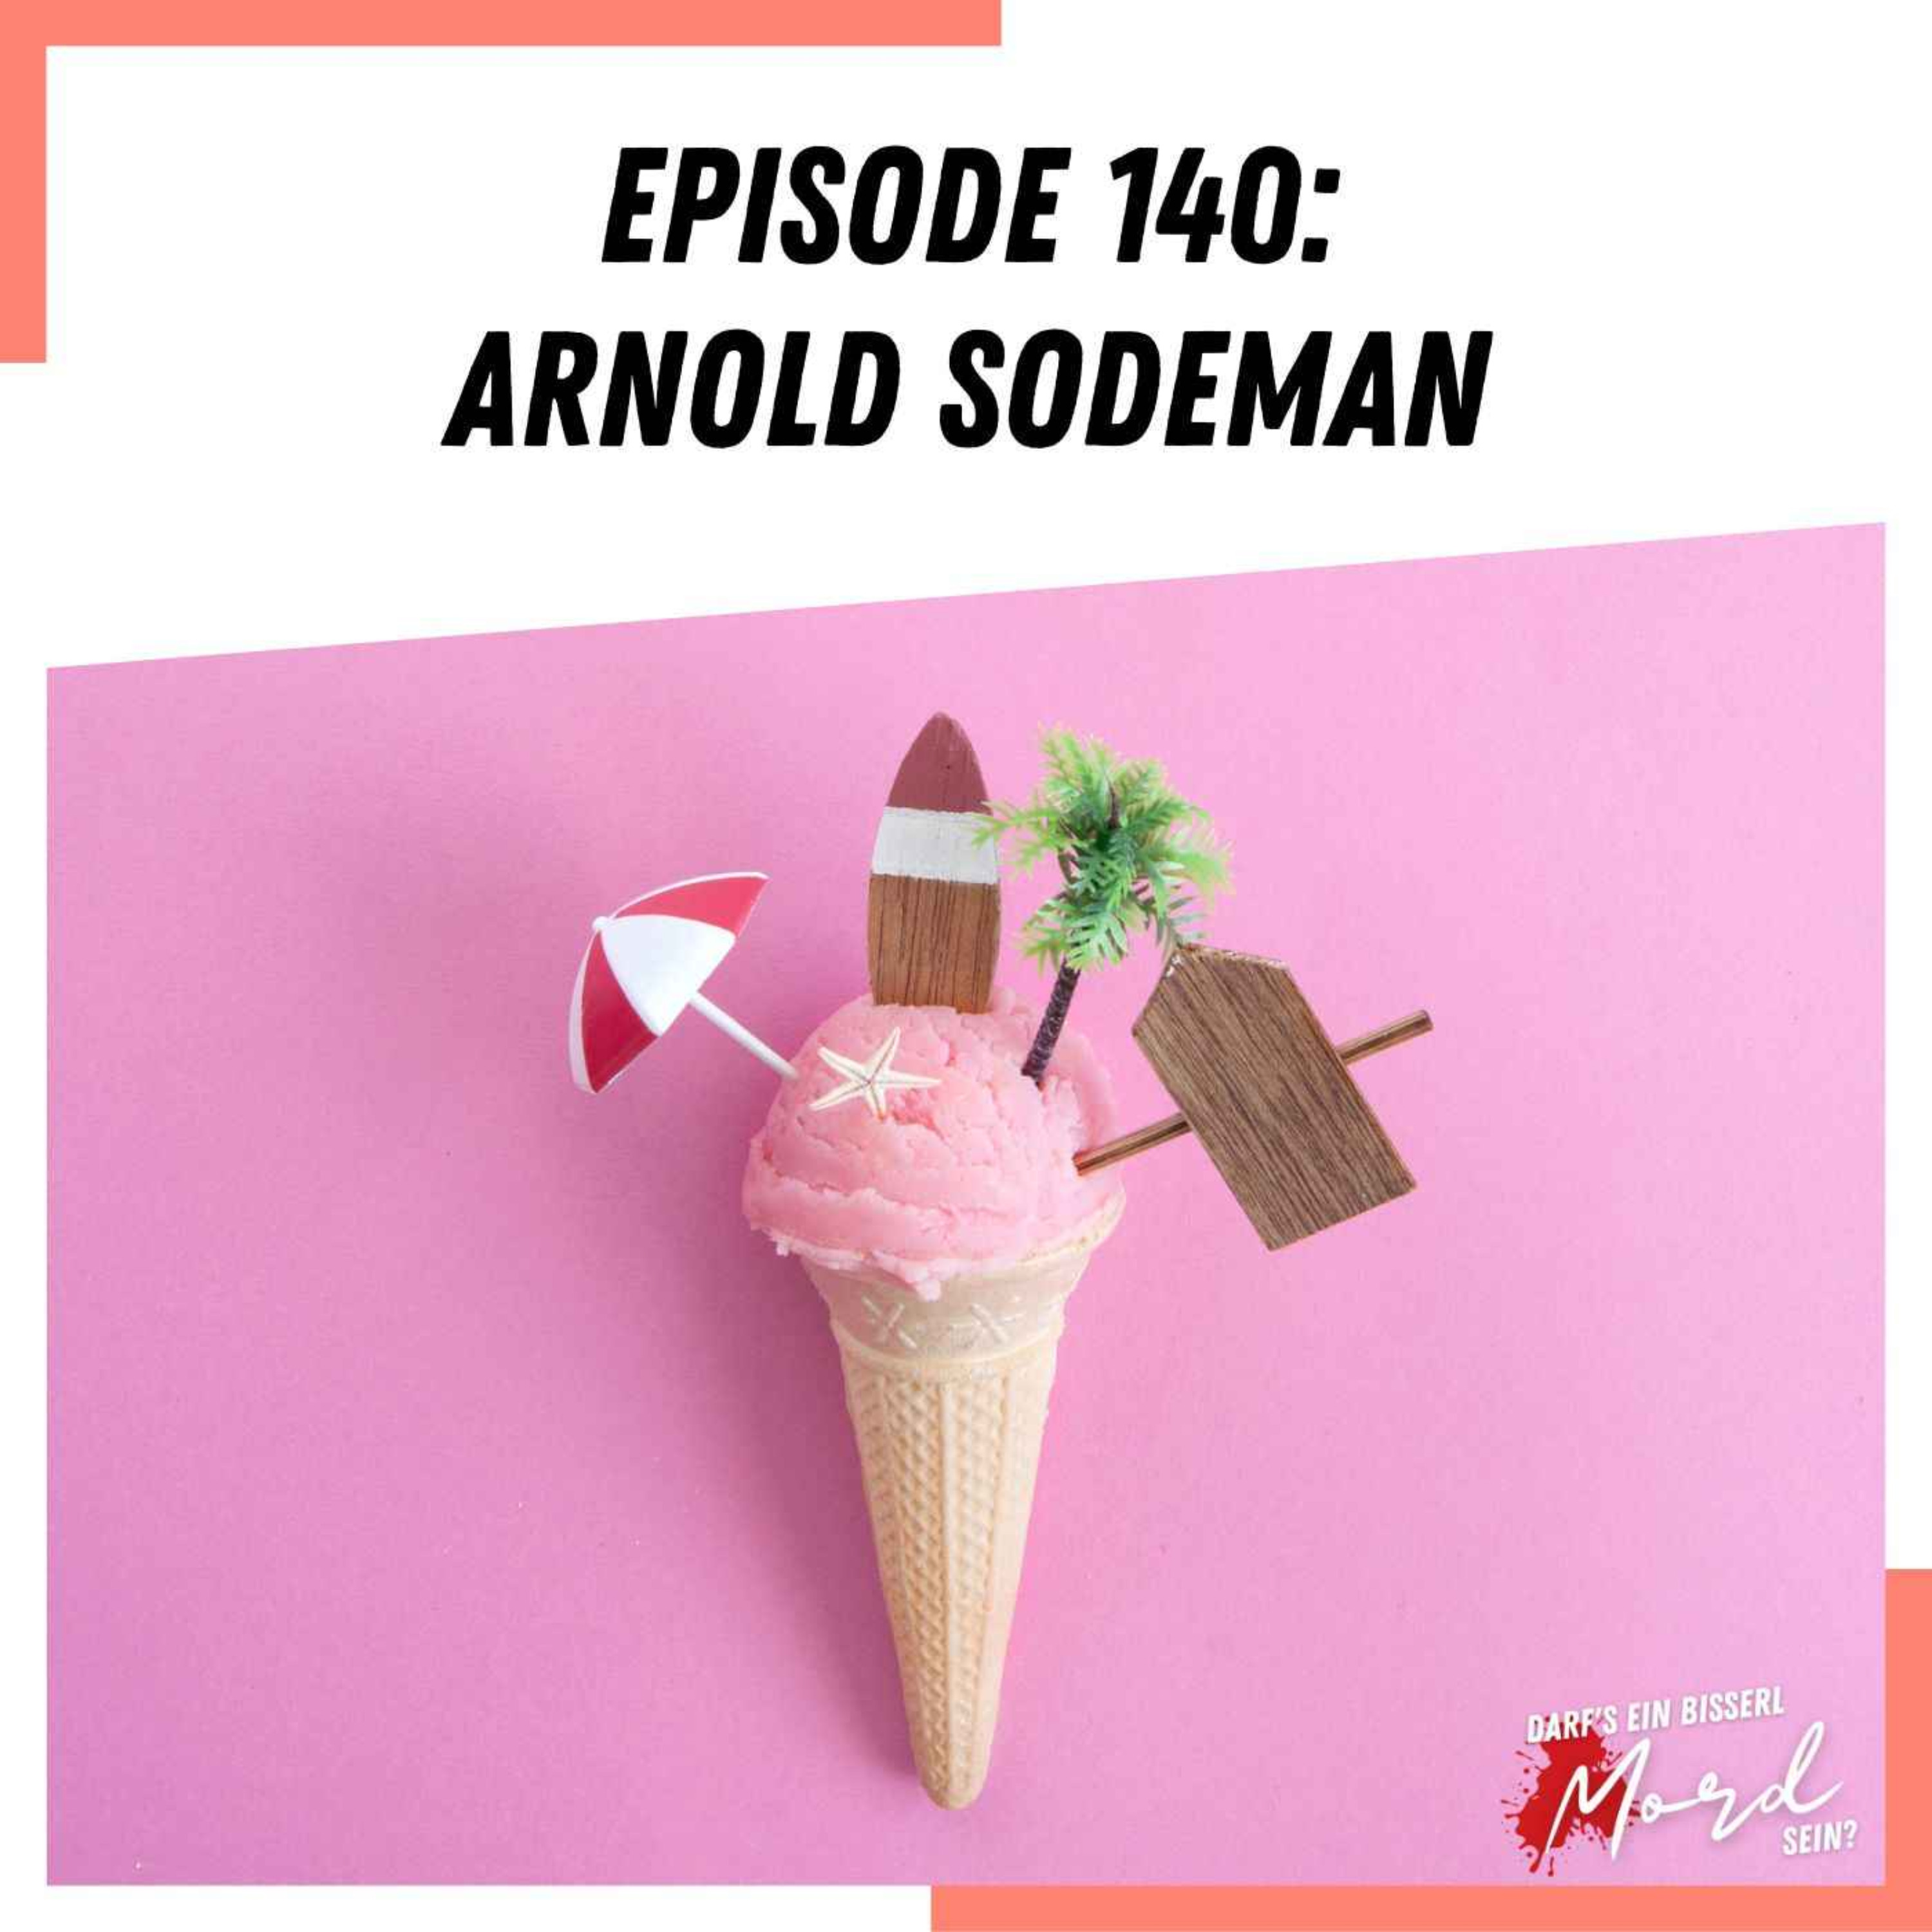 Episode 140: Arnold Sodeman